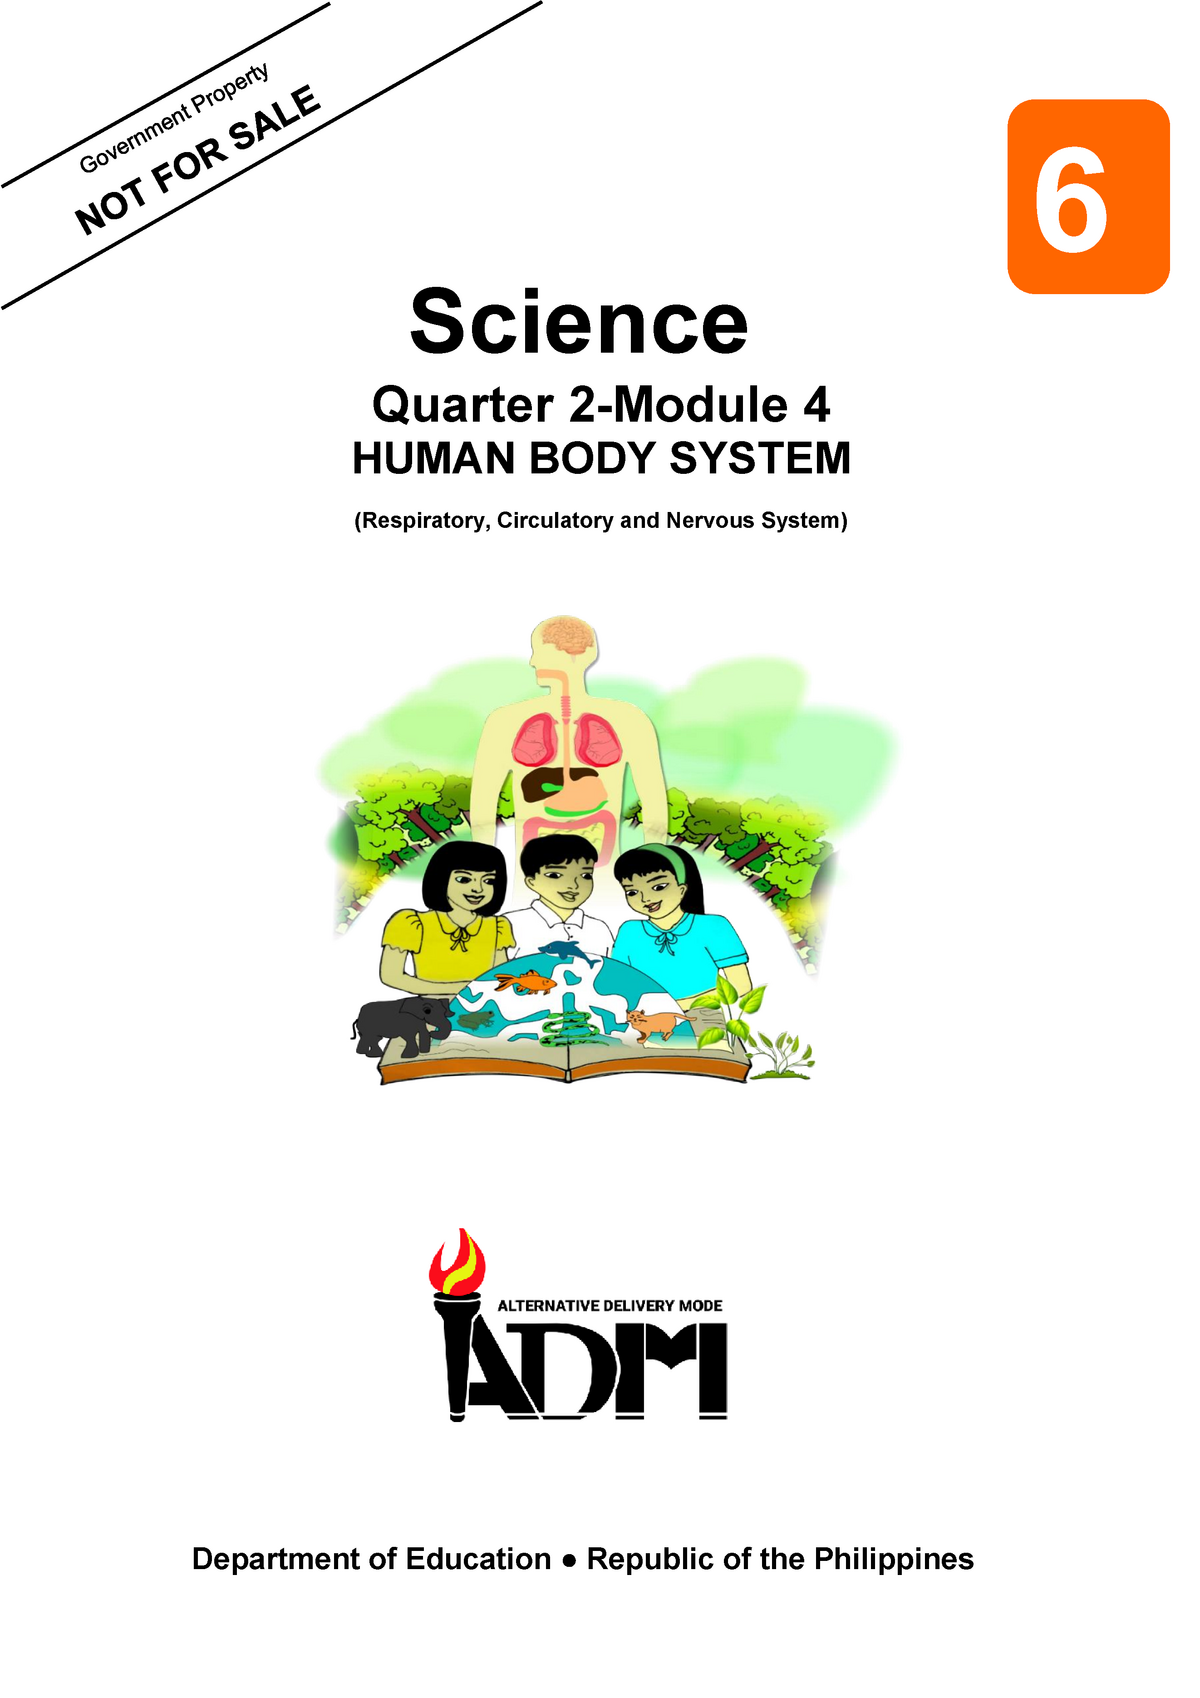 science-6-q2-mod4-human-body-system-v3-science-quarter-2-module-4